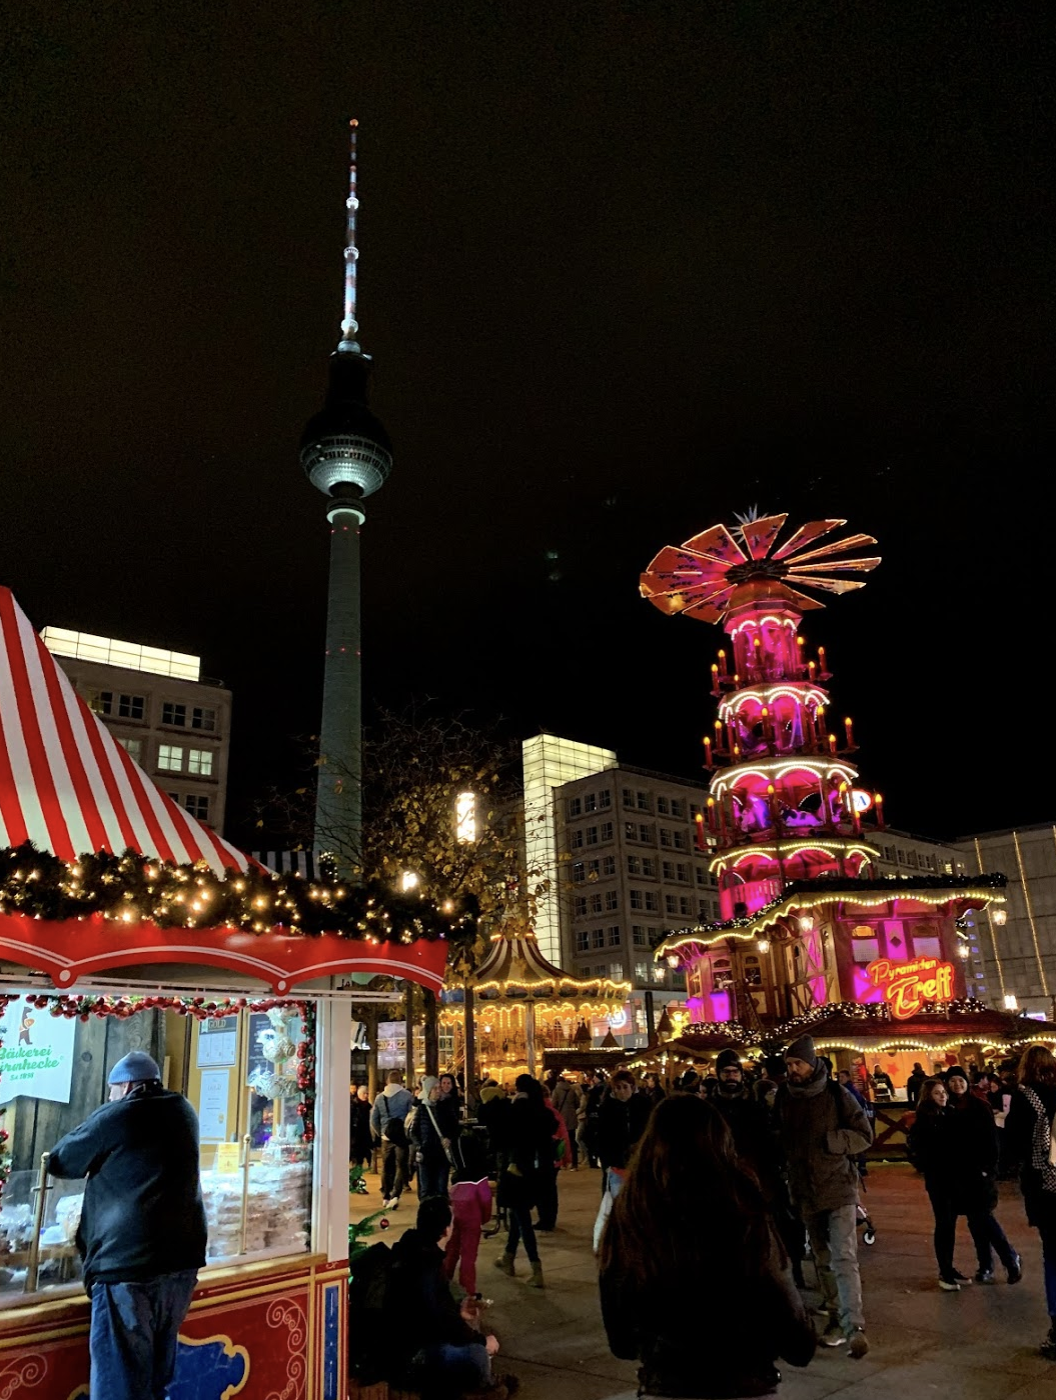 Christmas Market at Alexanderplatz, Berlin